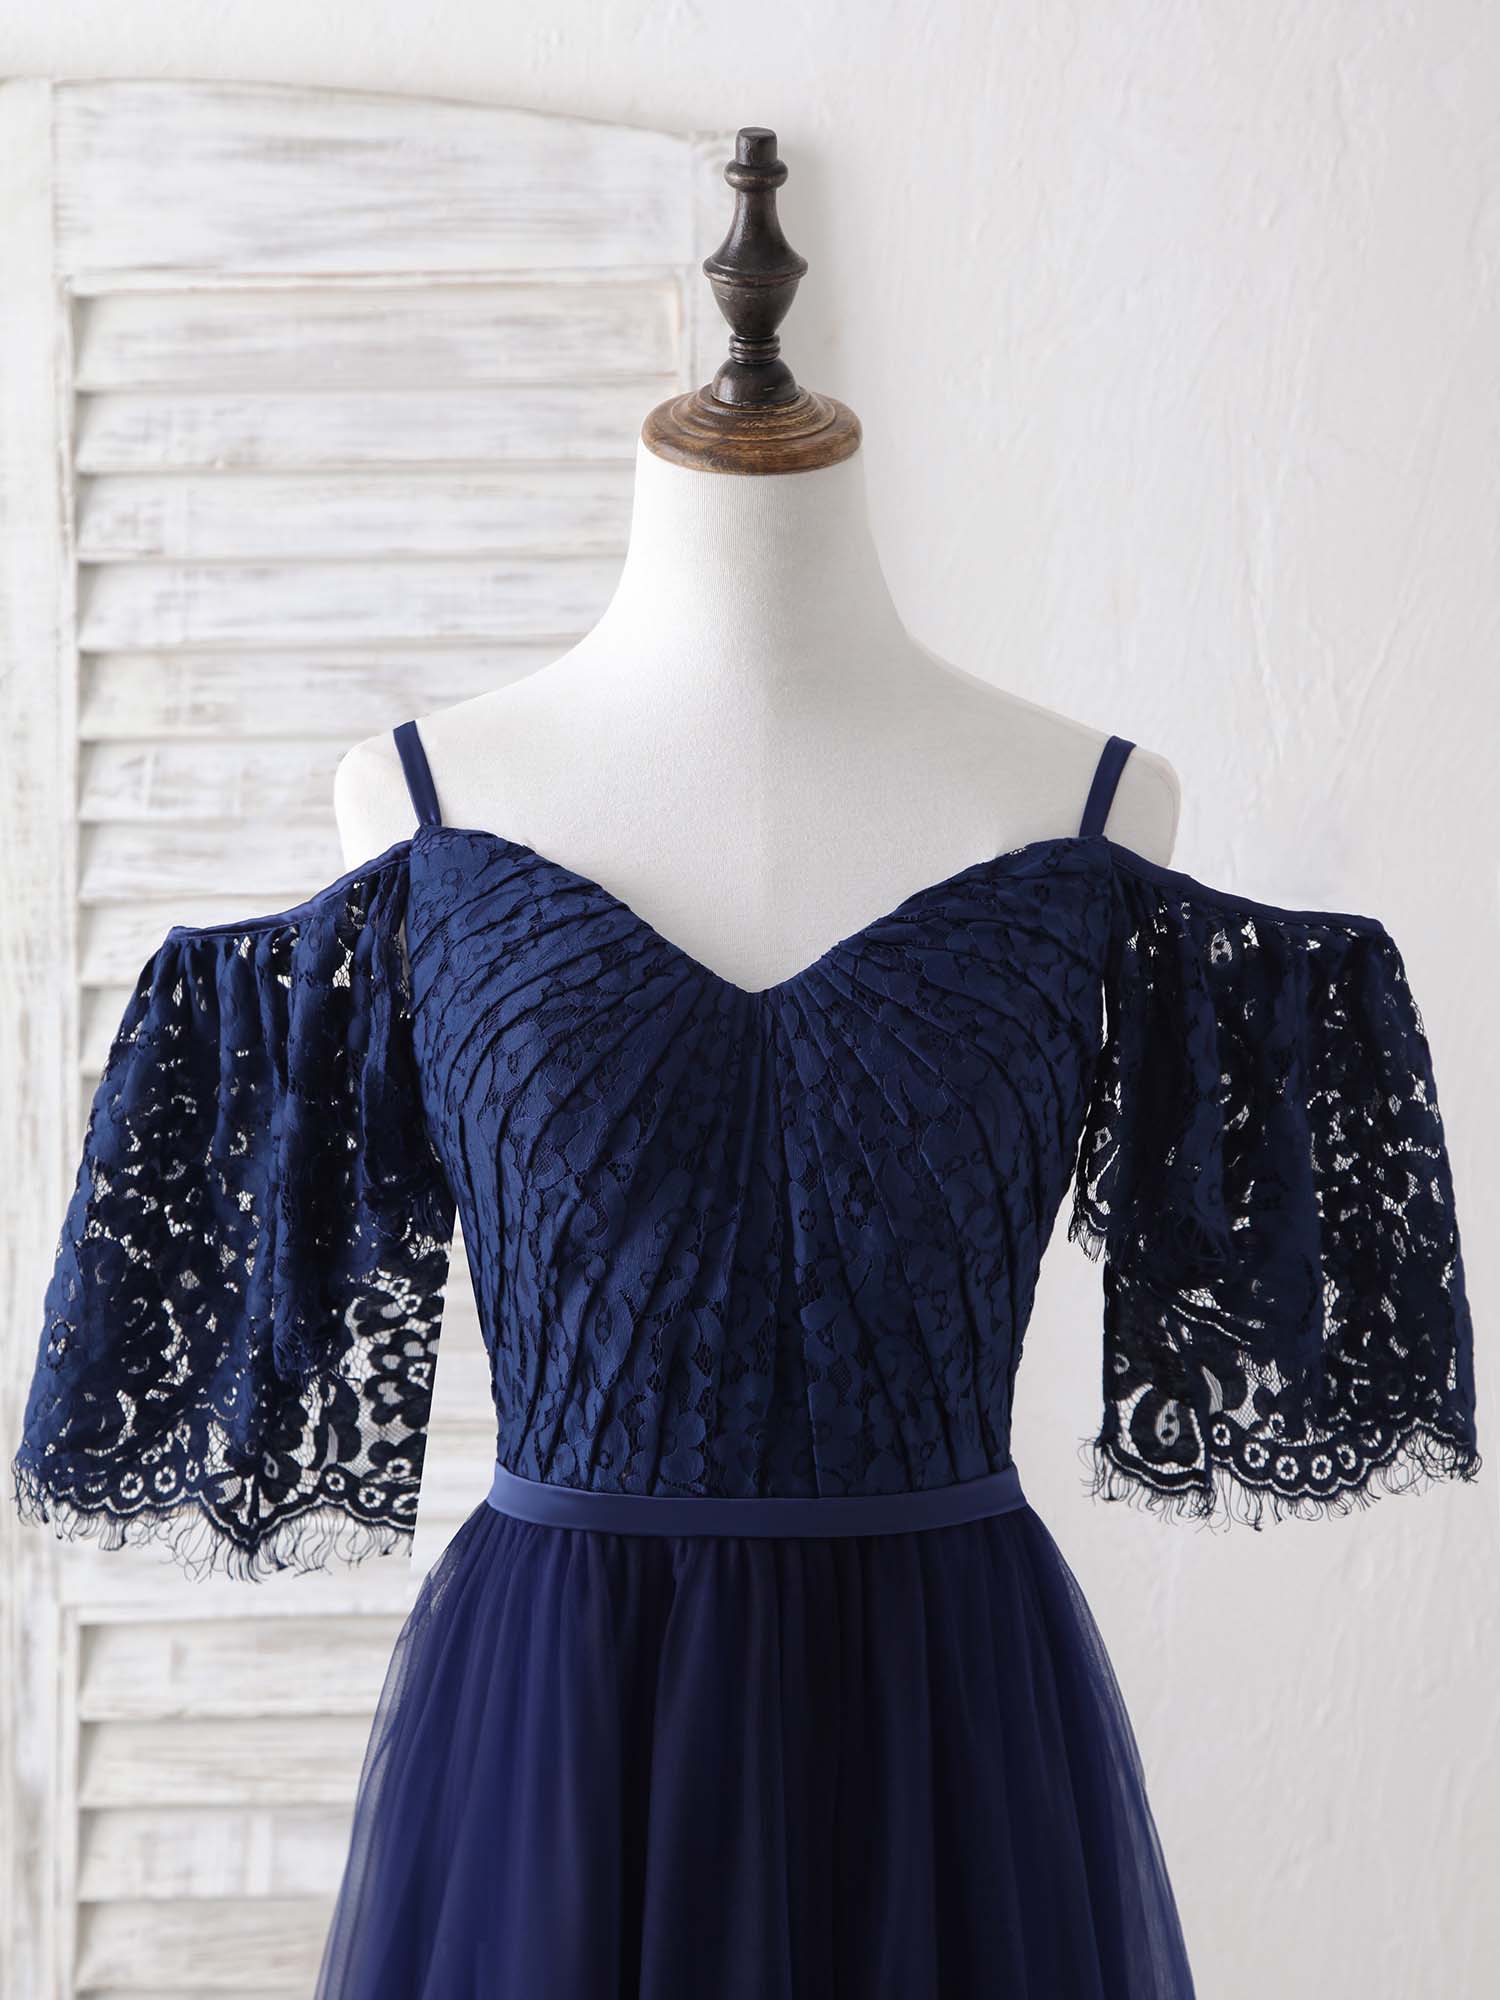 Bow Dress, Dark Blue A-Line Lace Tulle Long Prom Dress Blue Evening Dress